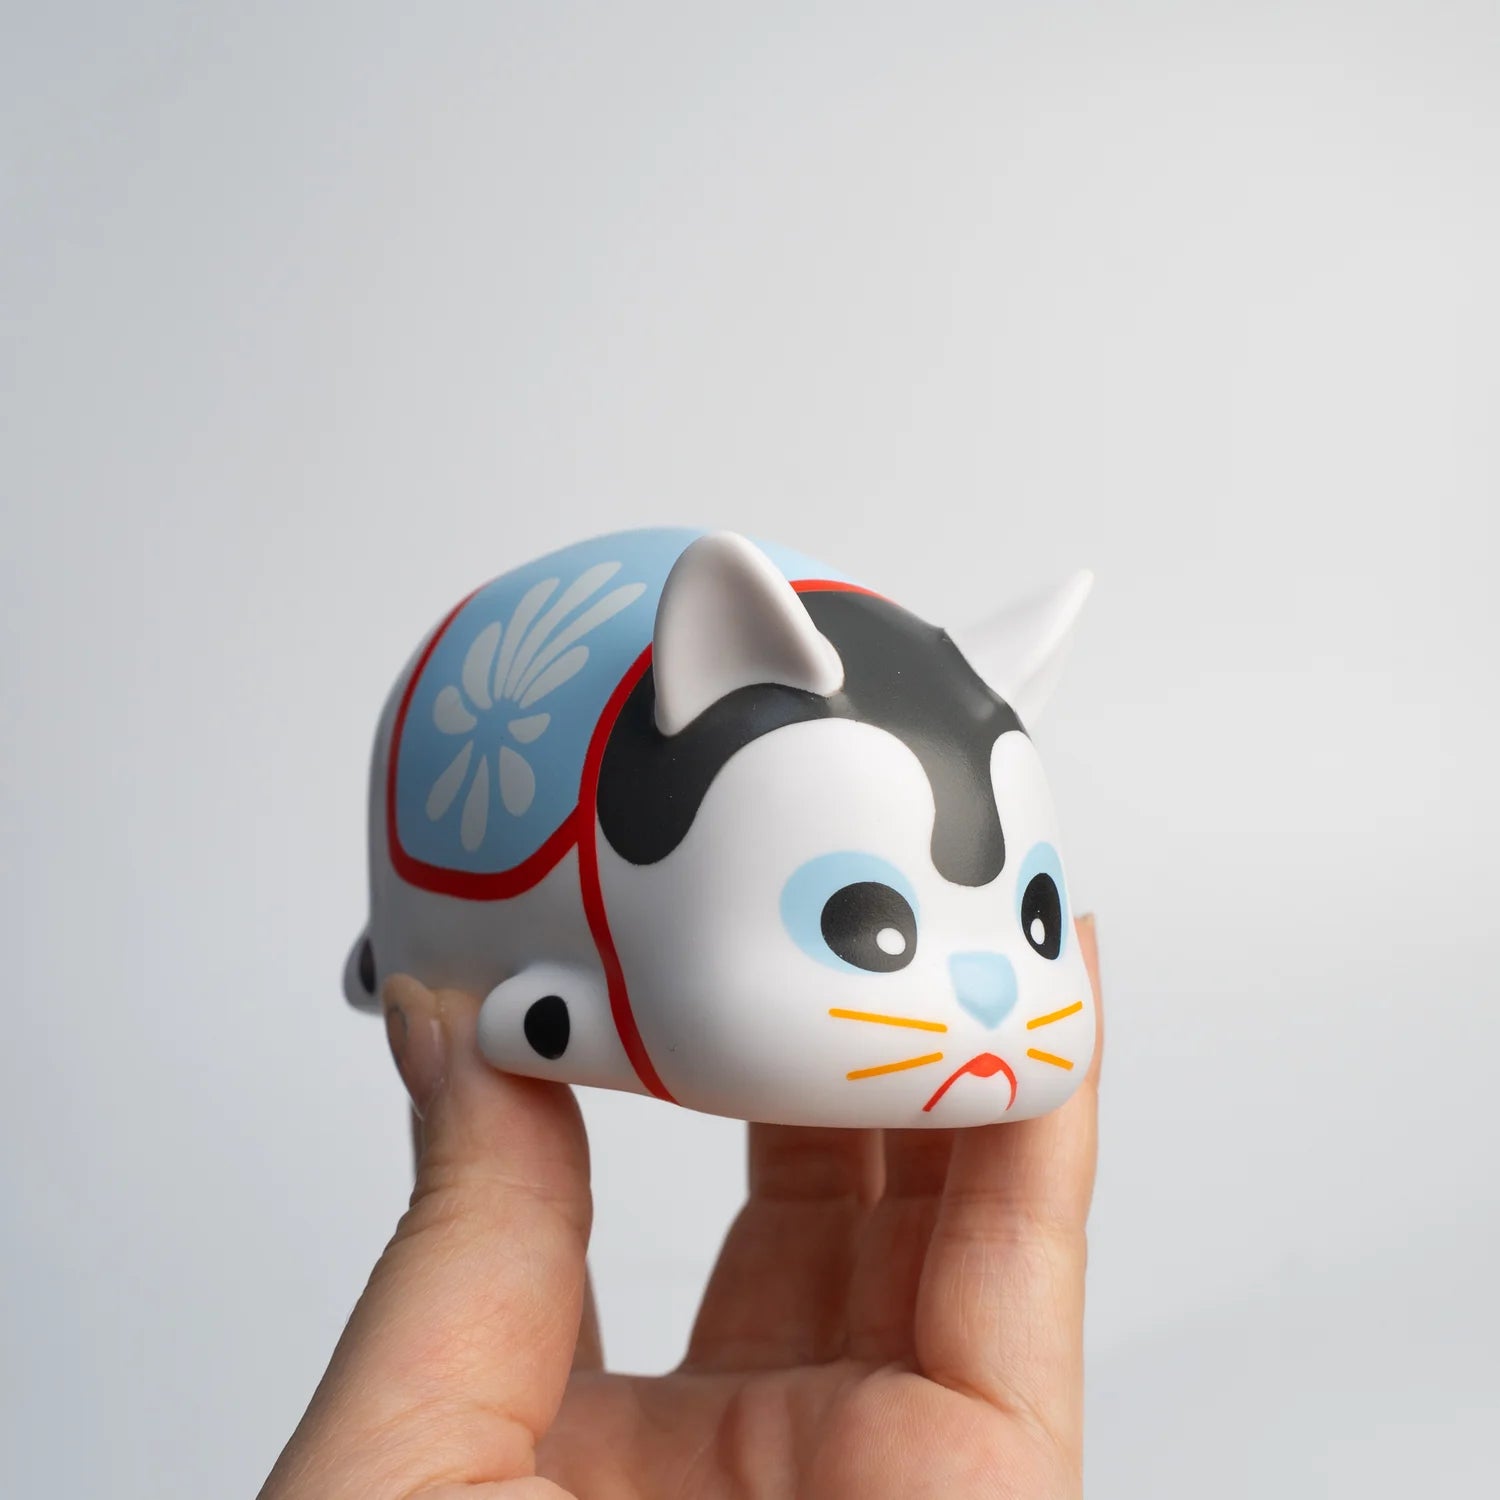 Alt text: A hand holding a toy cat, NIMBUS HARIKO TTE EDITION - Preorder, a soft vinyl animal figure designed by Paulus Hyu.